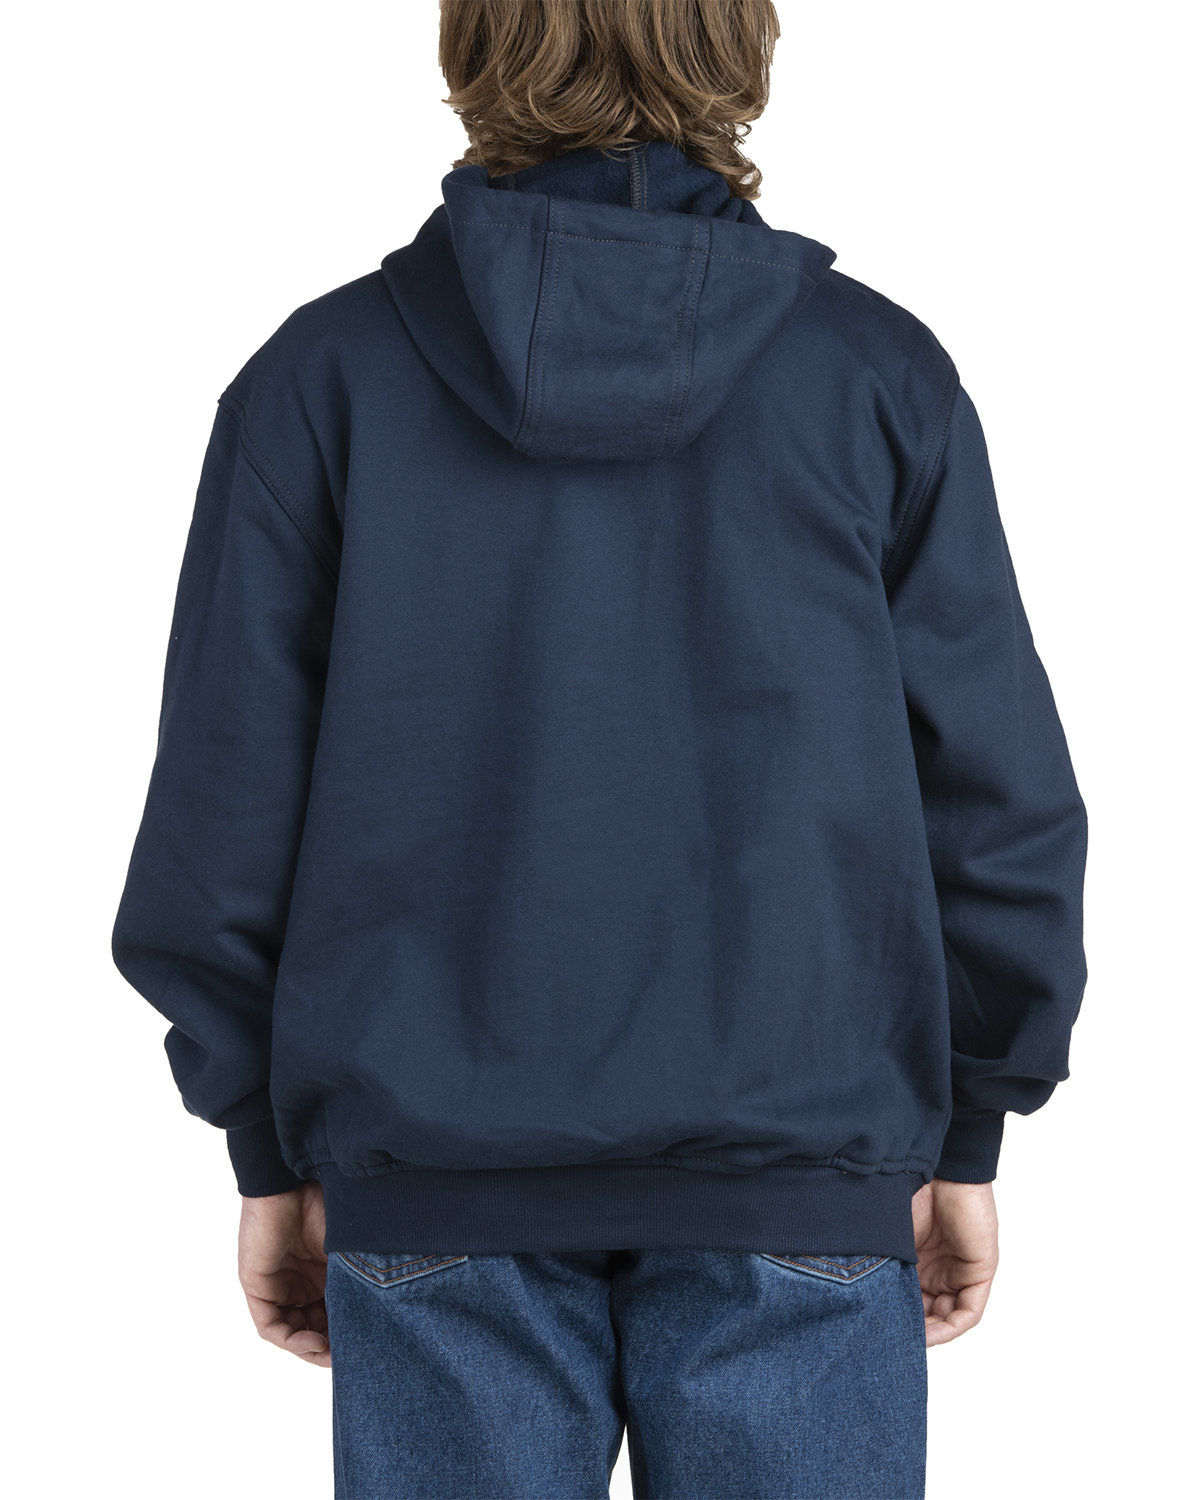 Berne FRSZ19T | Men's Tall Flame-Resistant Hooded Sweatshirt | ShirtSpace